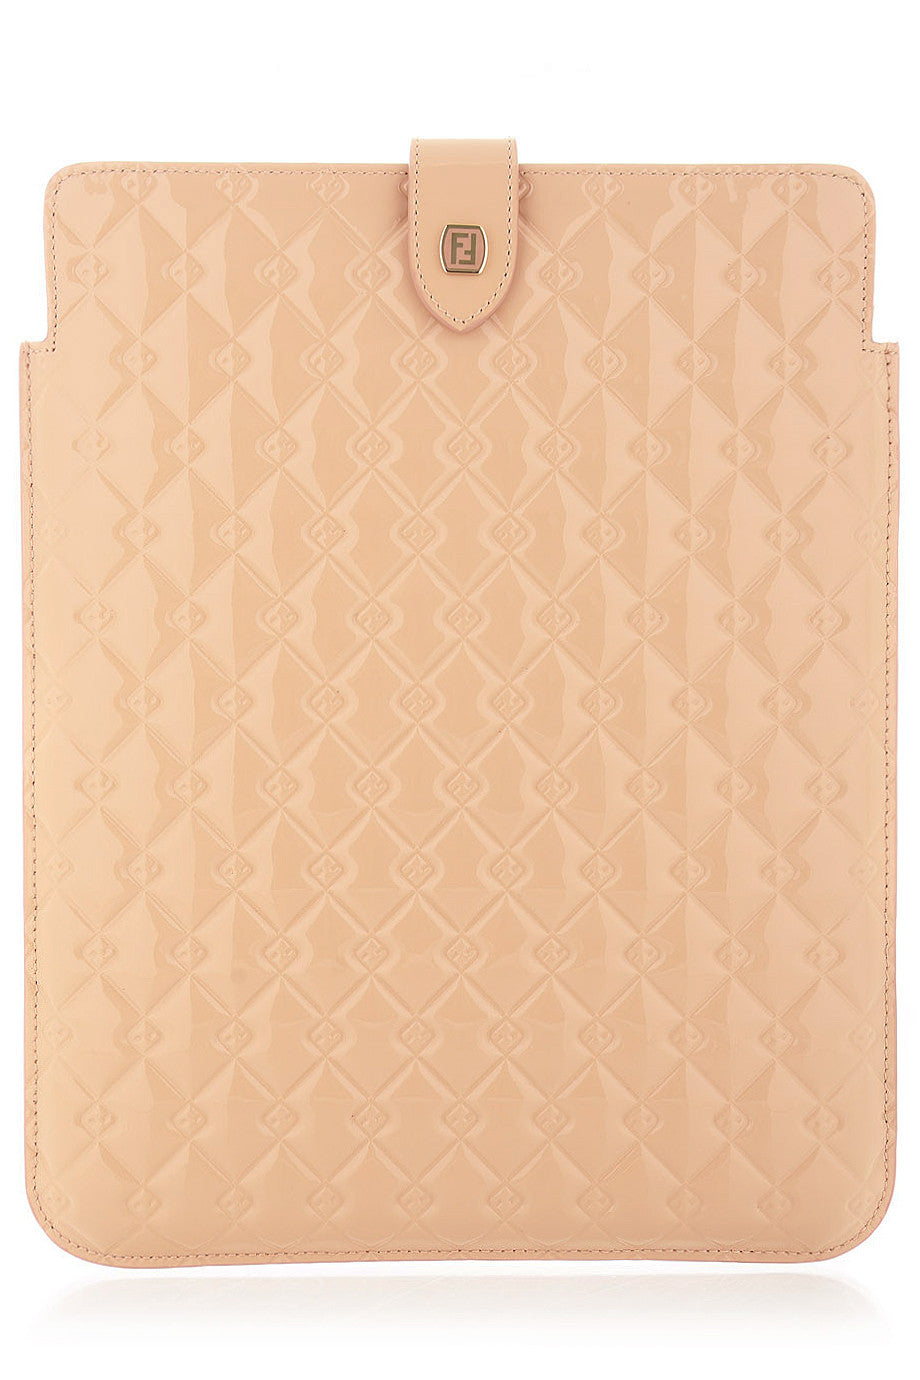 Louis Vuitton, Bags, Louis Vuitton Ipad Case